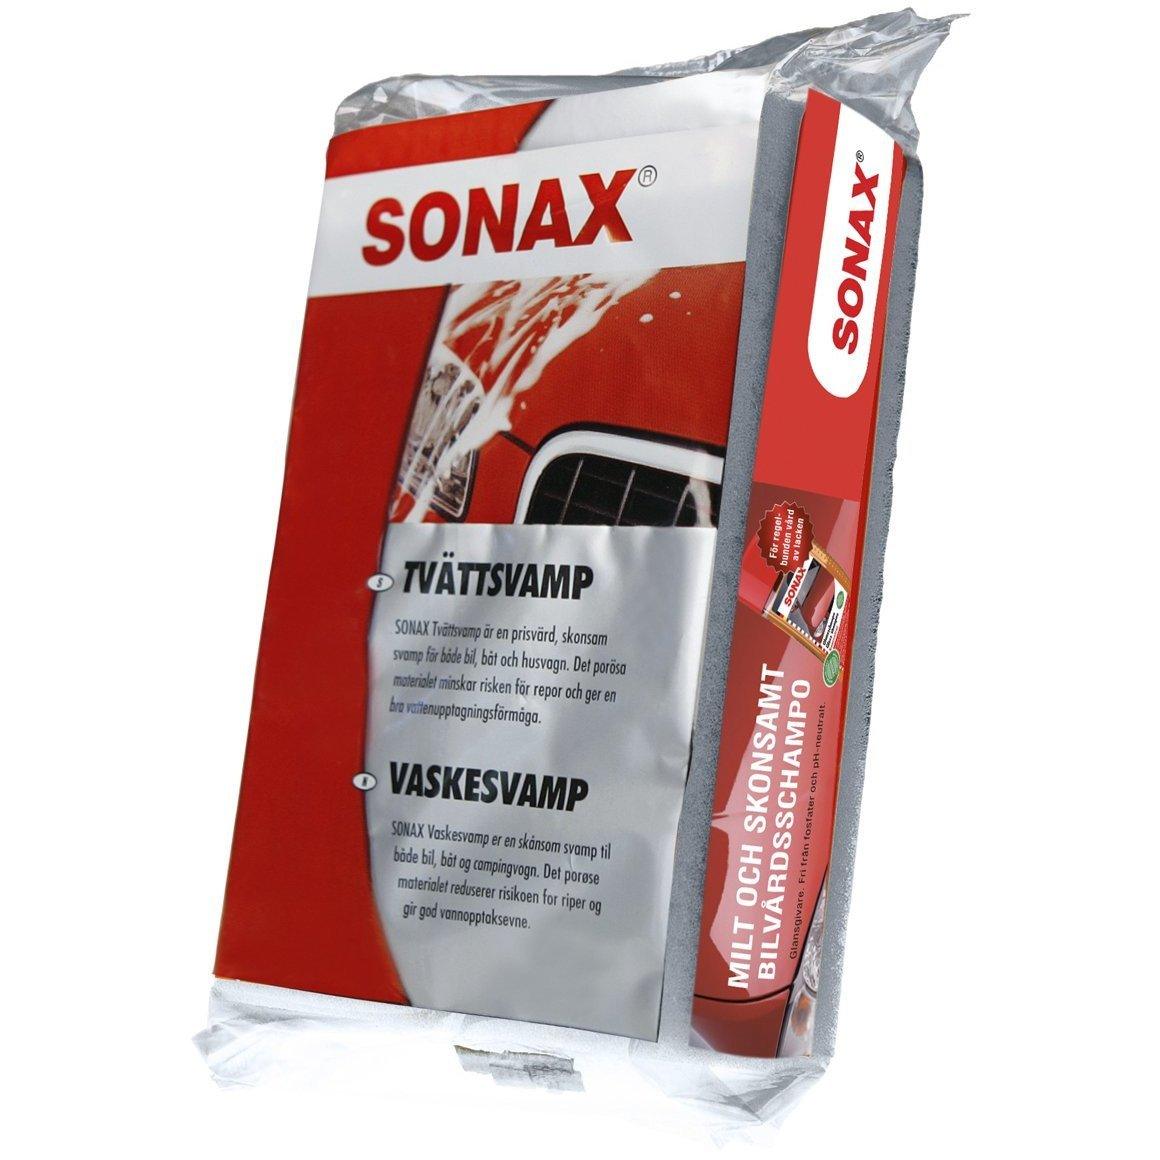 SONAX Vaskesvamp Bilvask - Xpert Cleaning